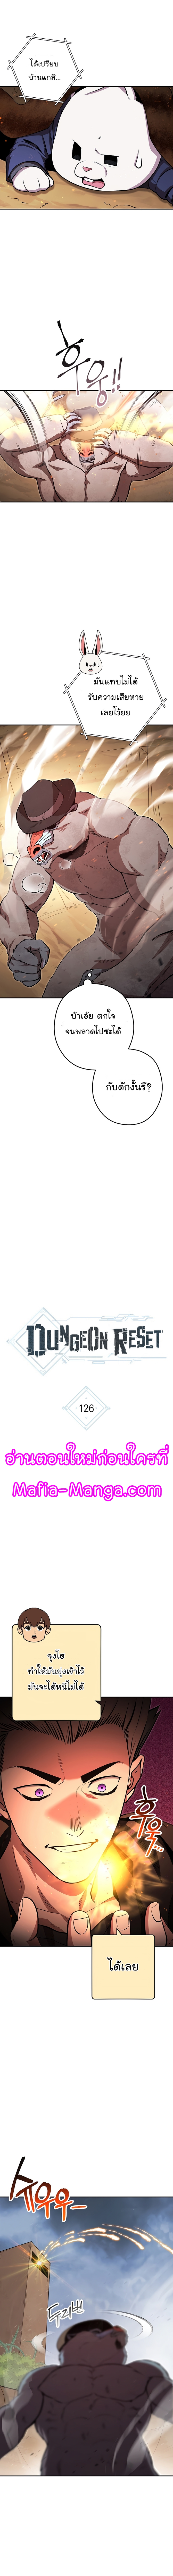 Dungeon Reset 126 02